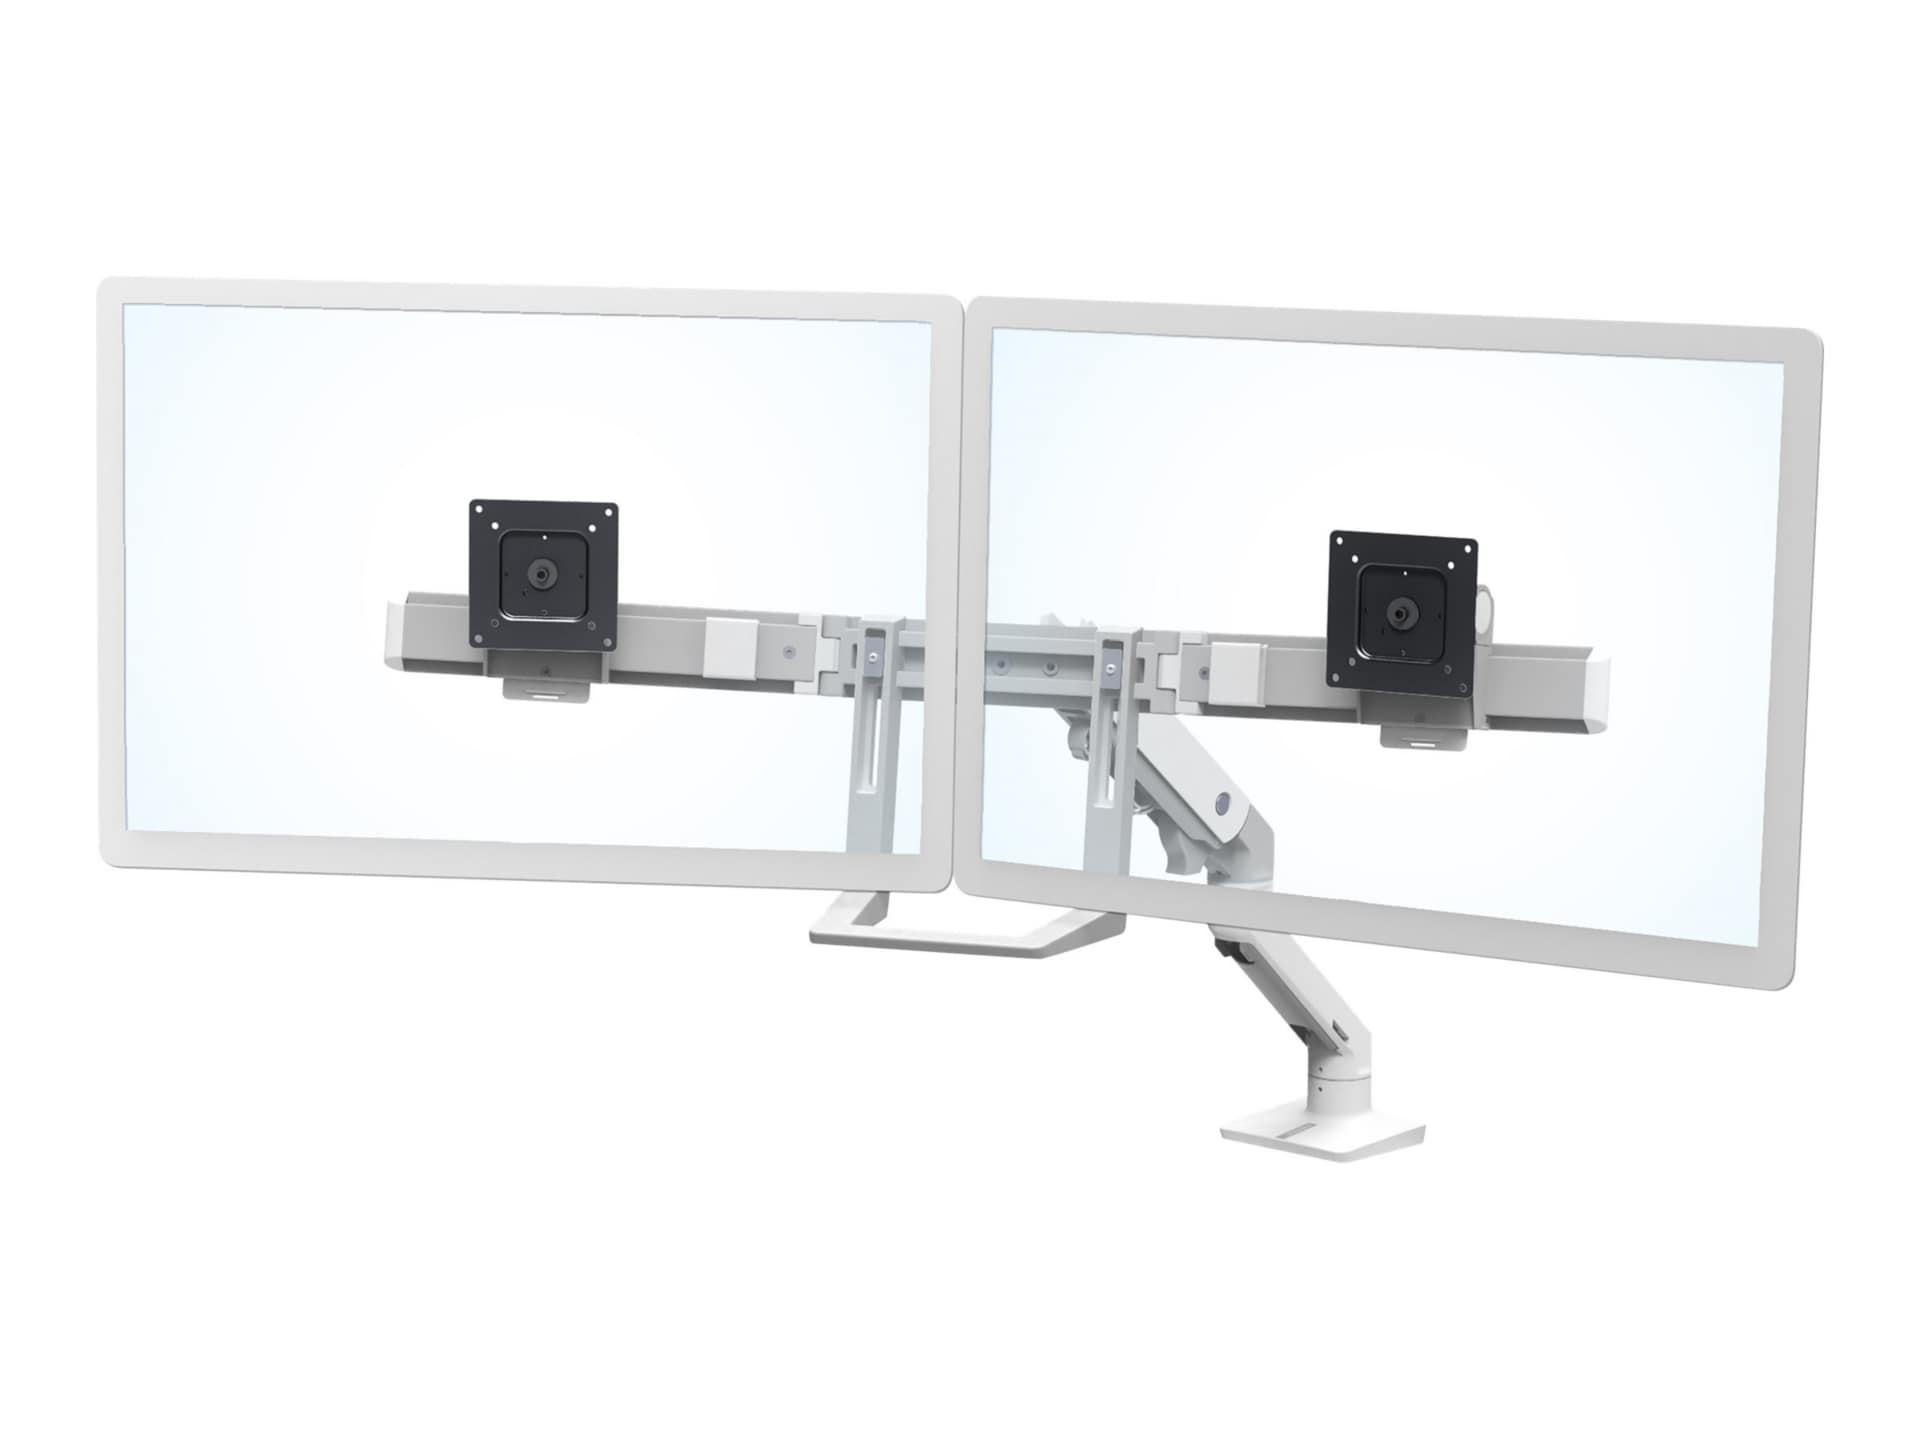 Ergotron HX Desk Dual Monitor Arm mounting kit - for 2 monitors - polished